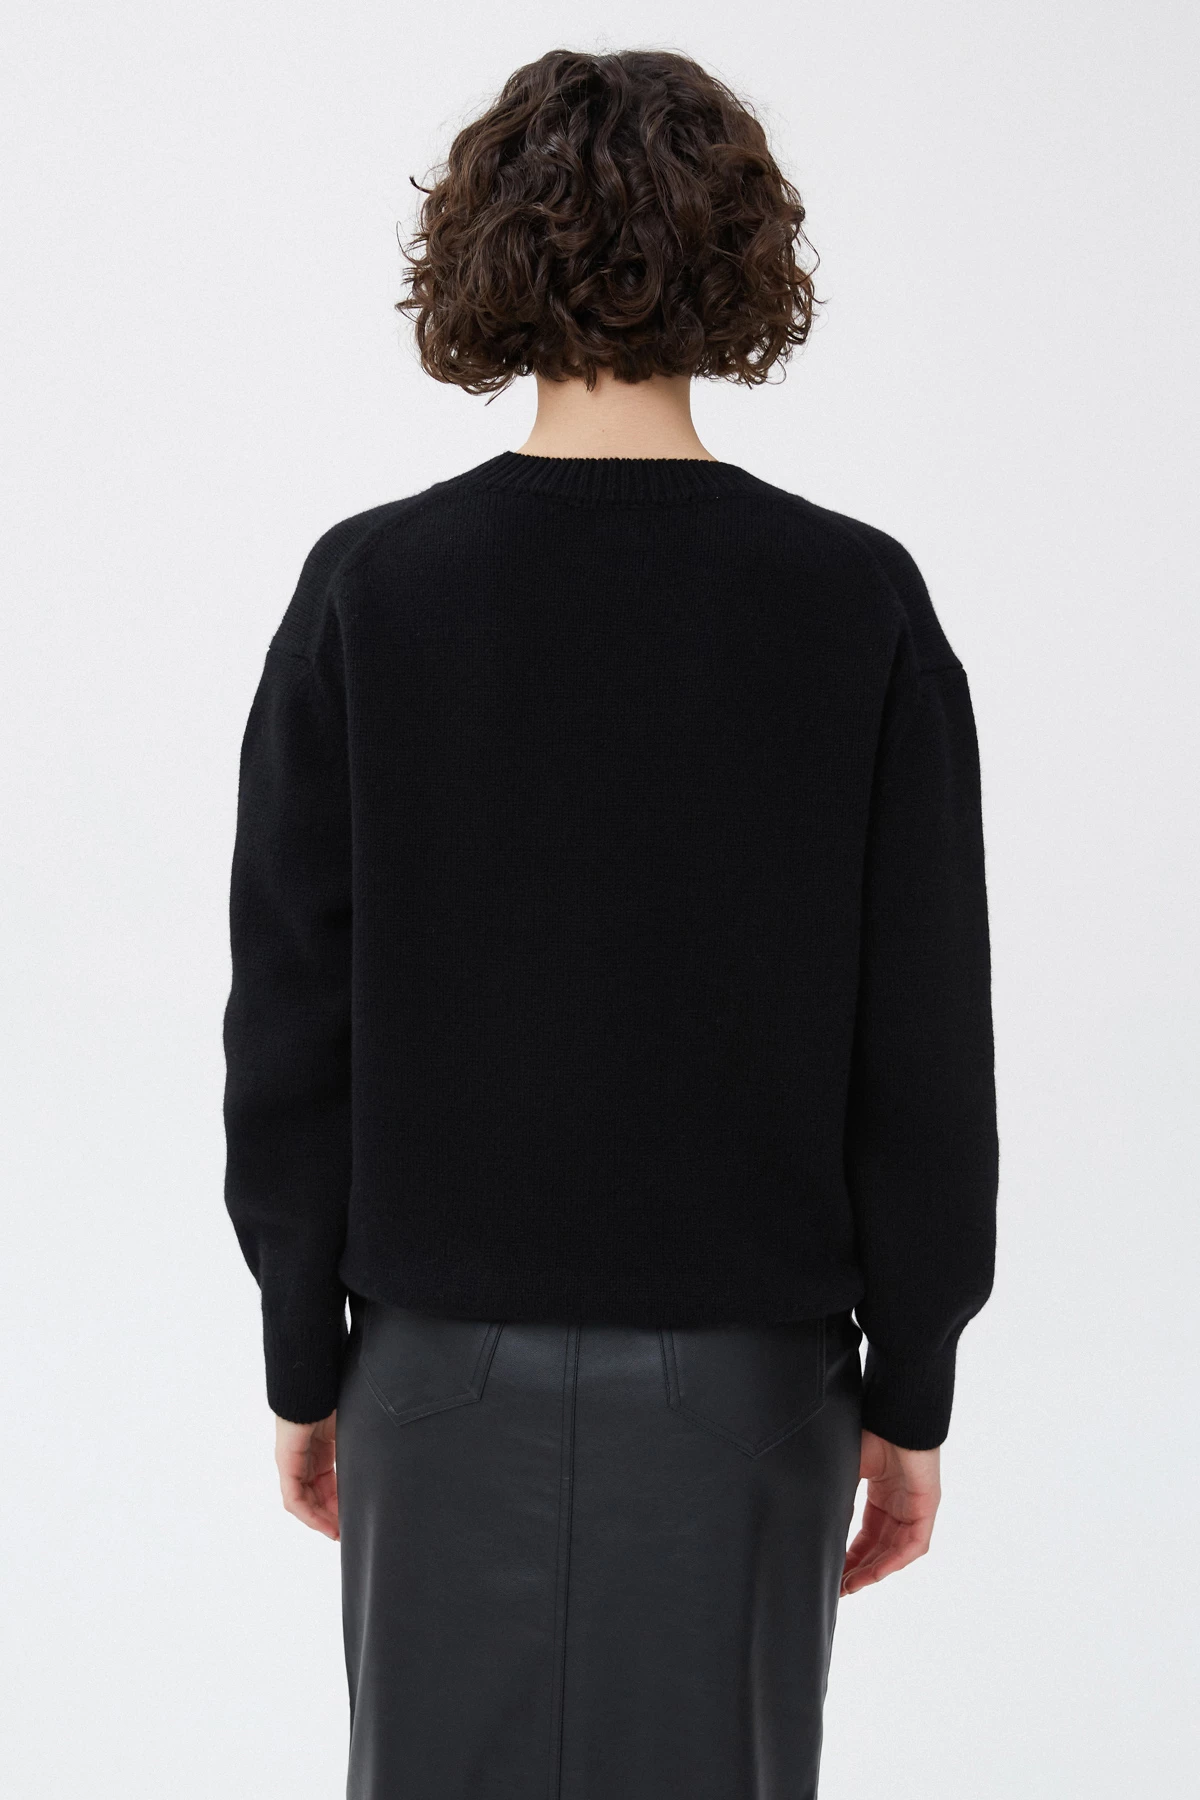 Cashmere black sweater, photo 5